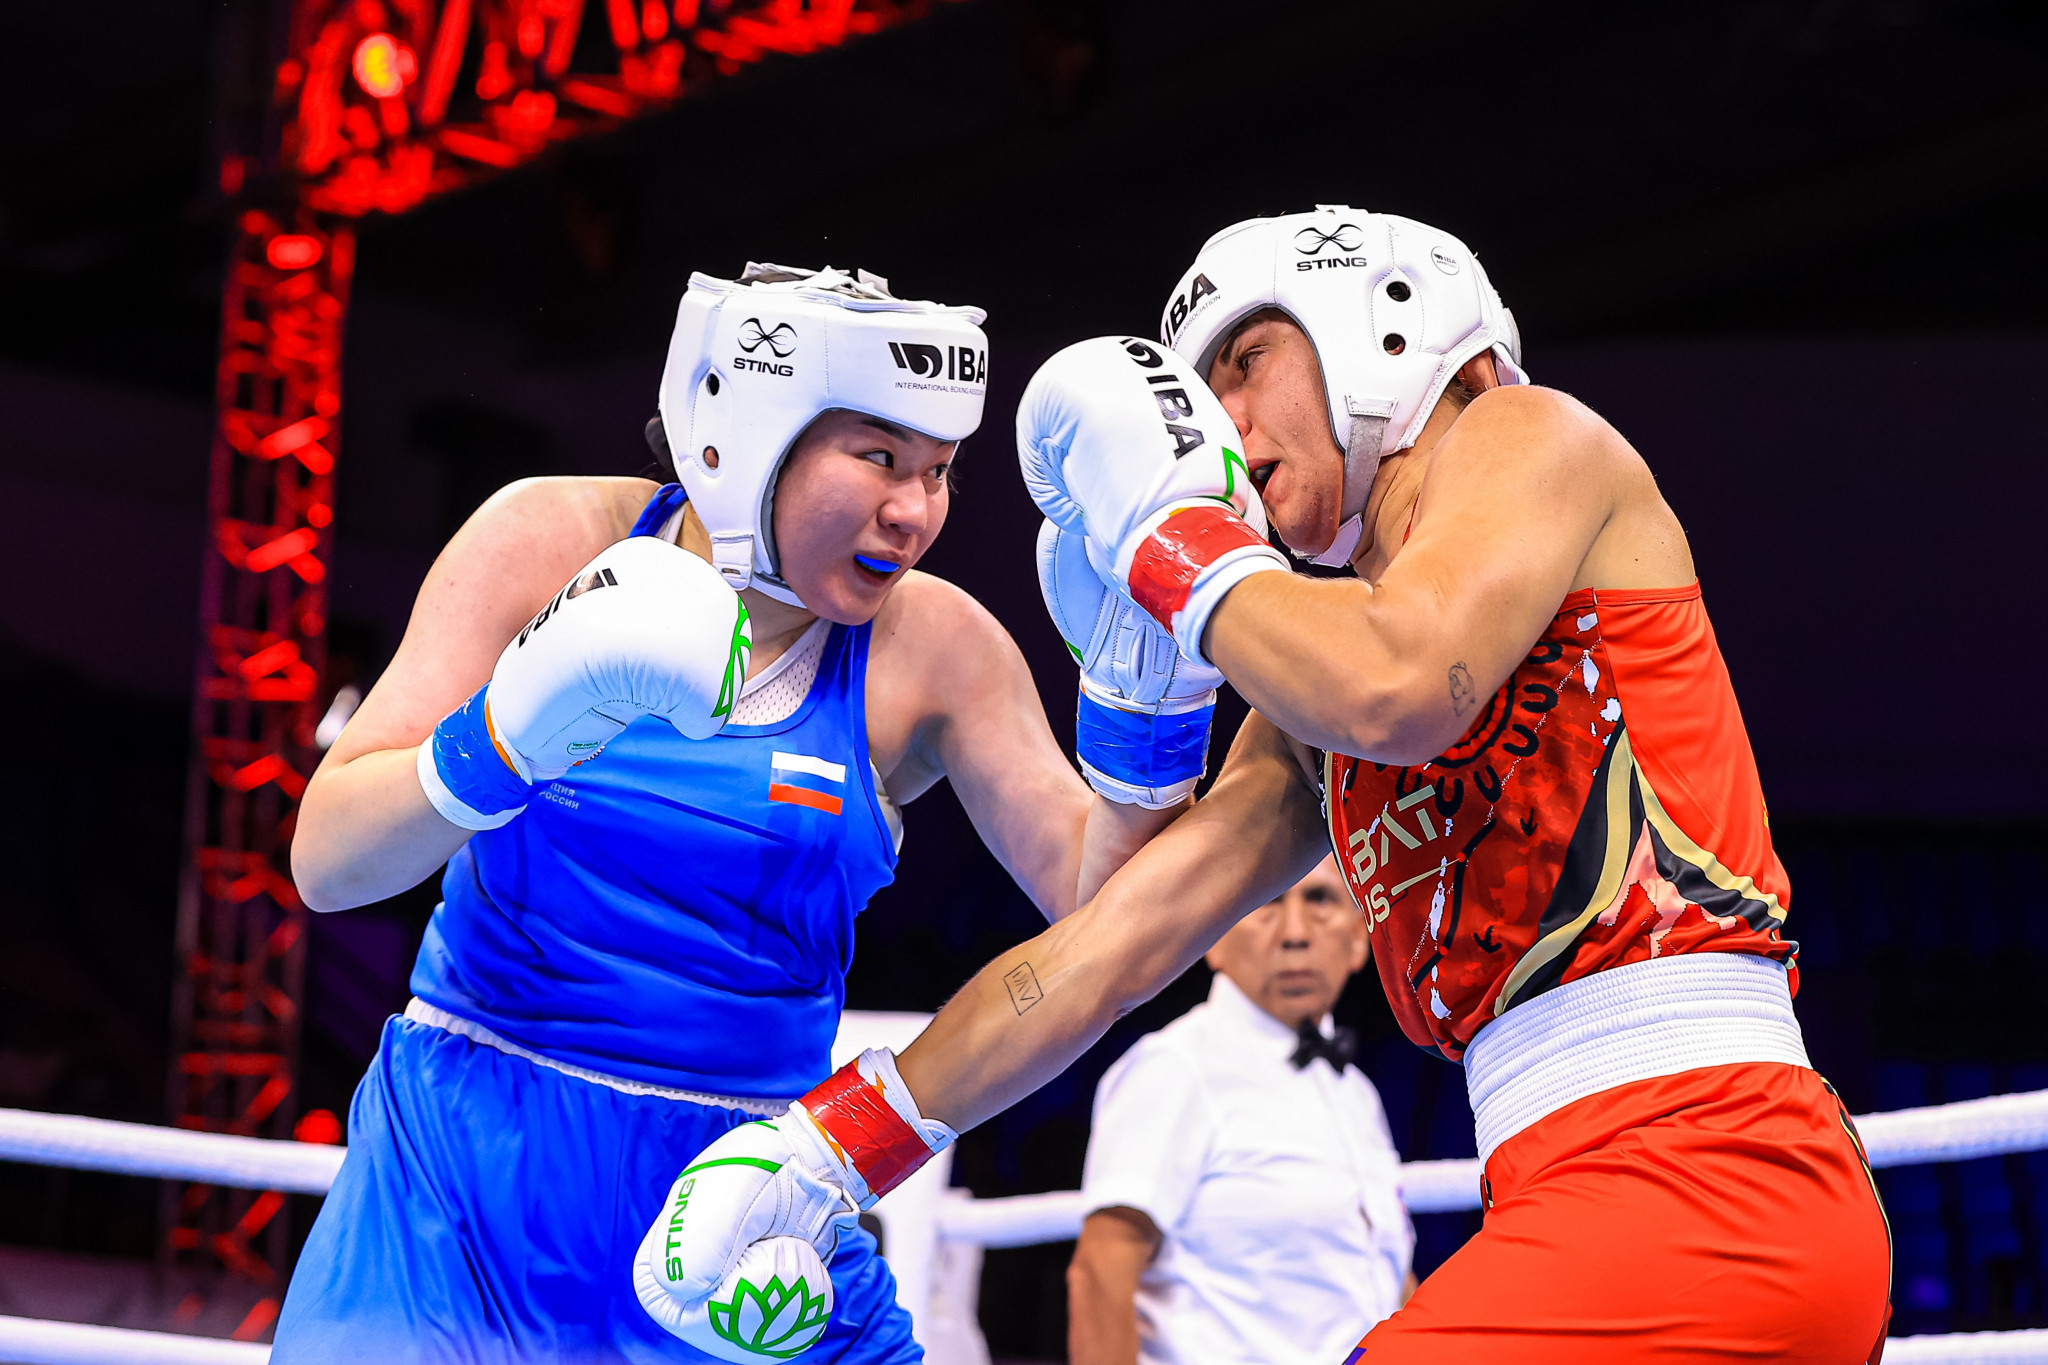 Australia's Emma-Sue Greentree, right, overcame Russia's Saltanat Medenova, left, in her opening light heavyweight bout in New Delhi ©IBA